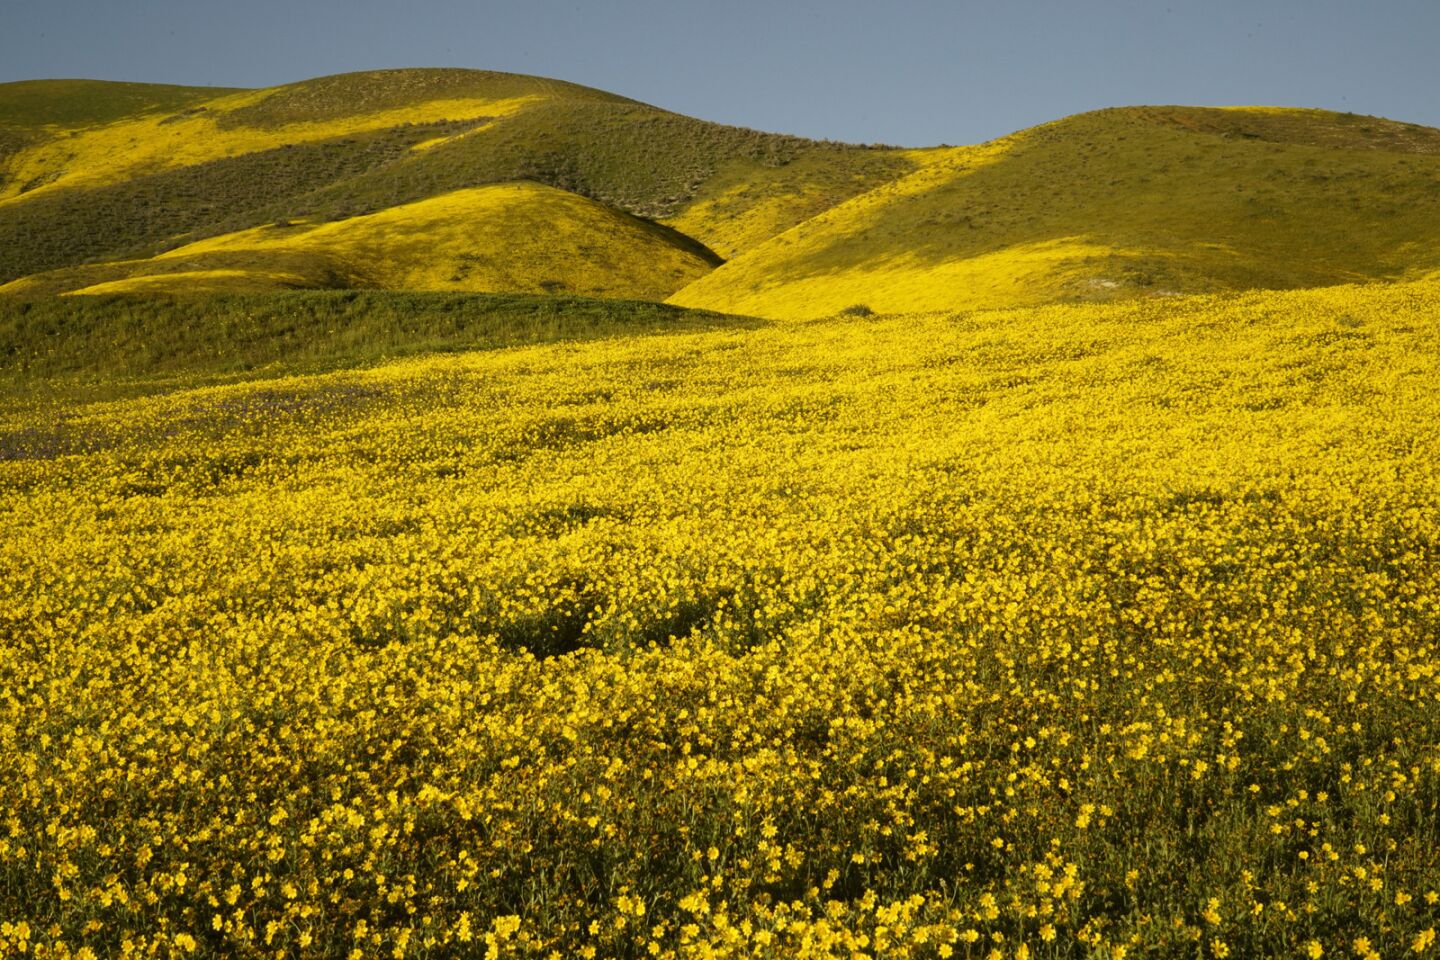 Wildflowers create a sea of yellow in the Carrizo Plain in southeastern San Luis Obispo County.